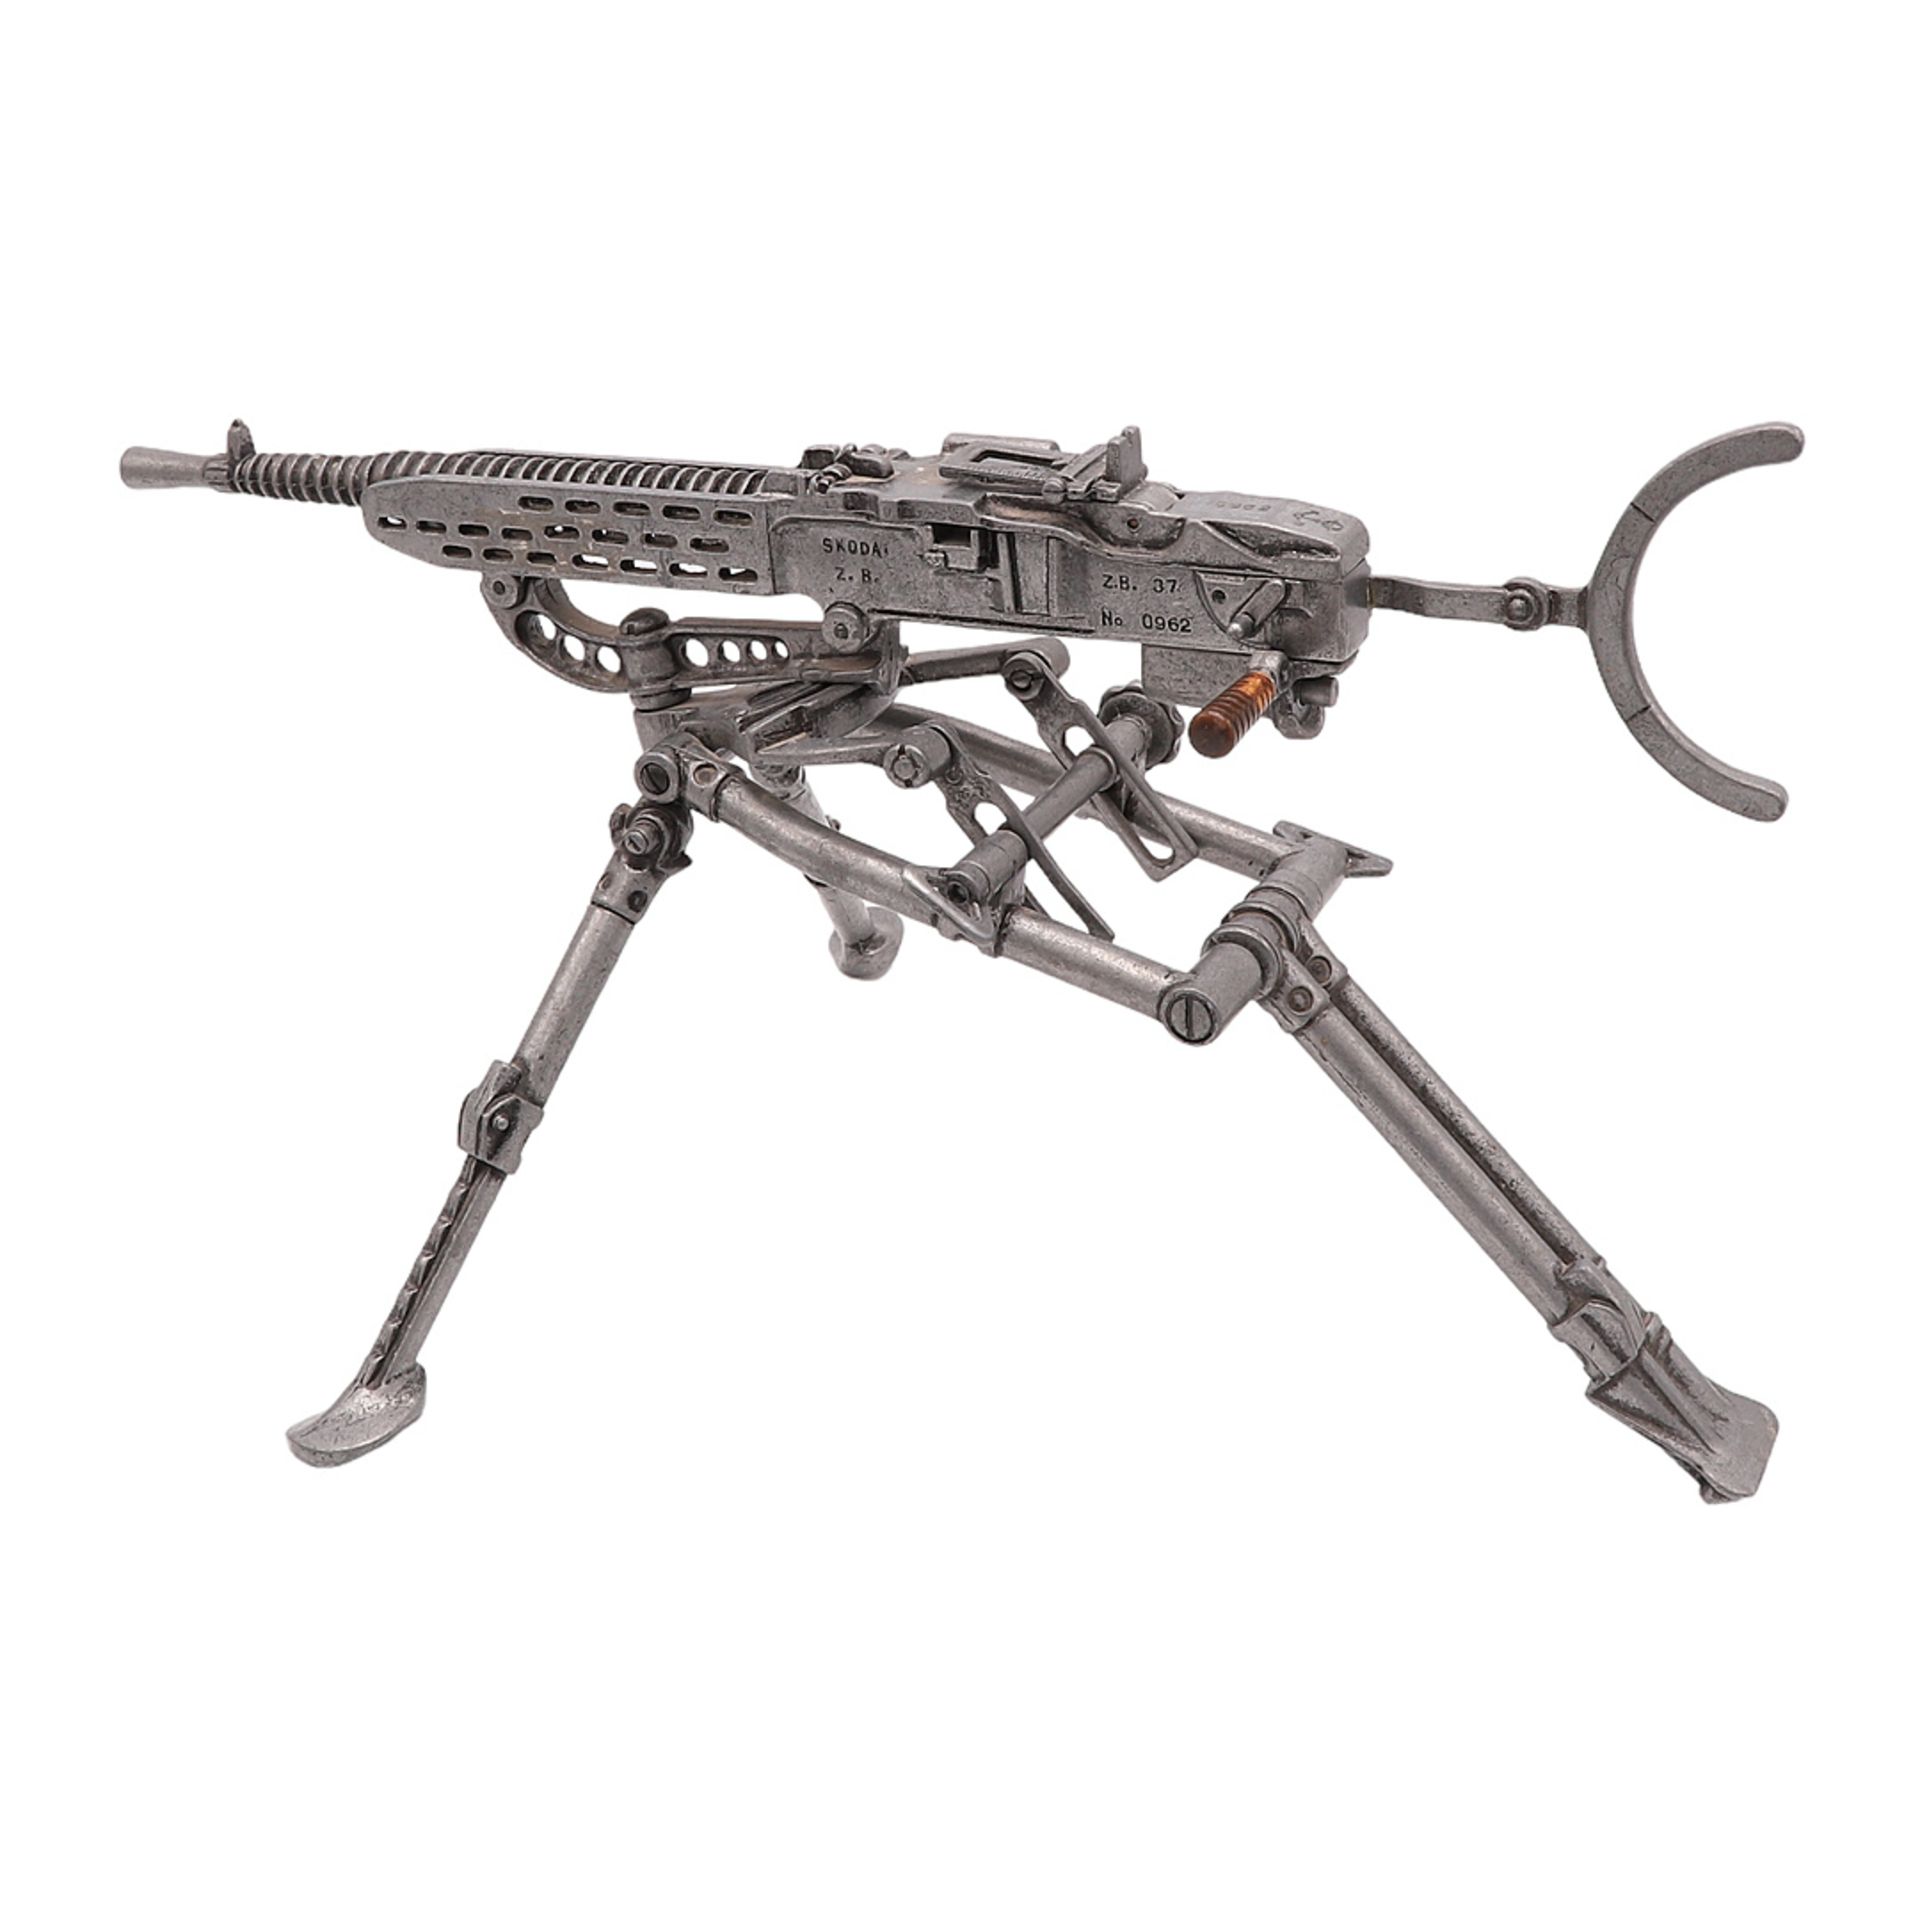 Skoda, Machine gun model - Image 2 of 4